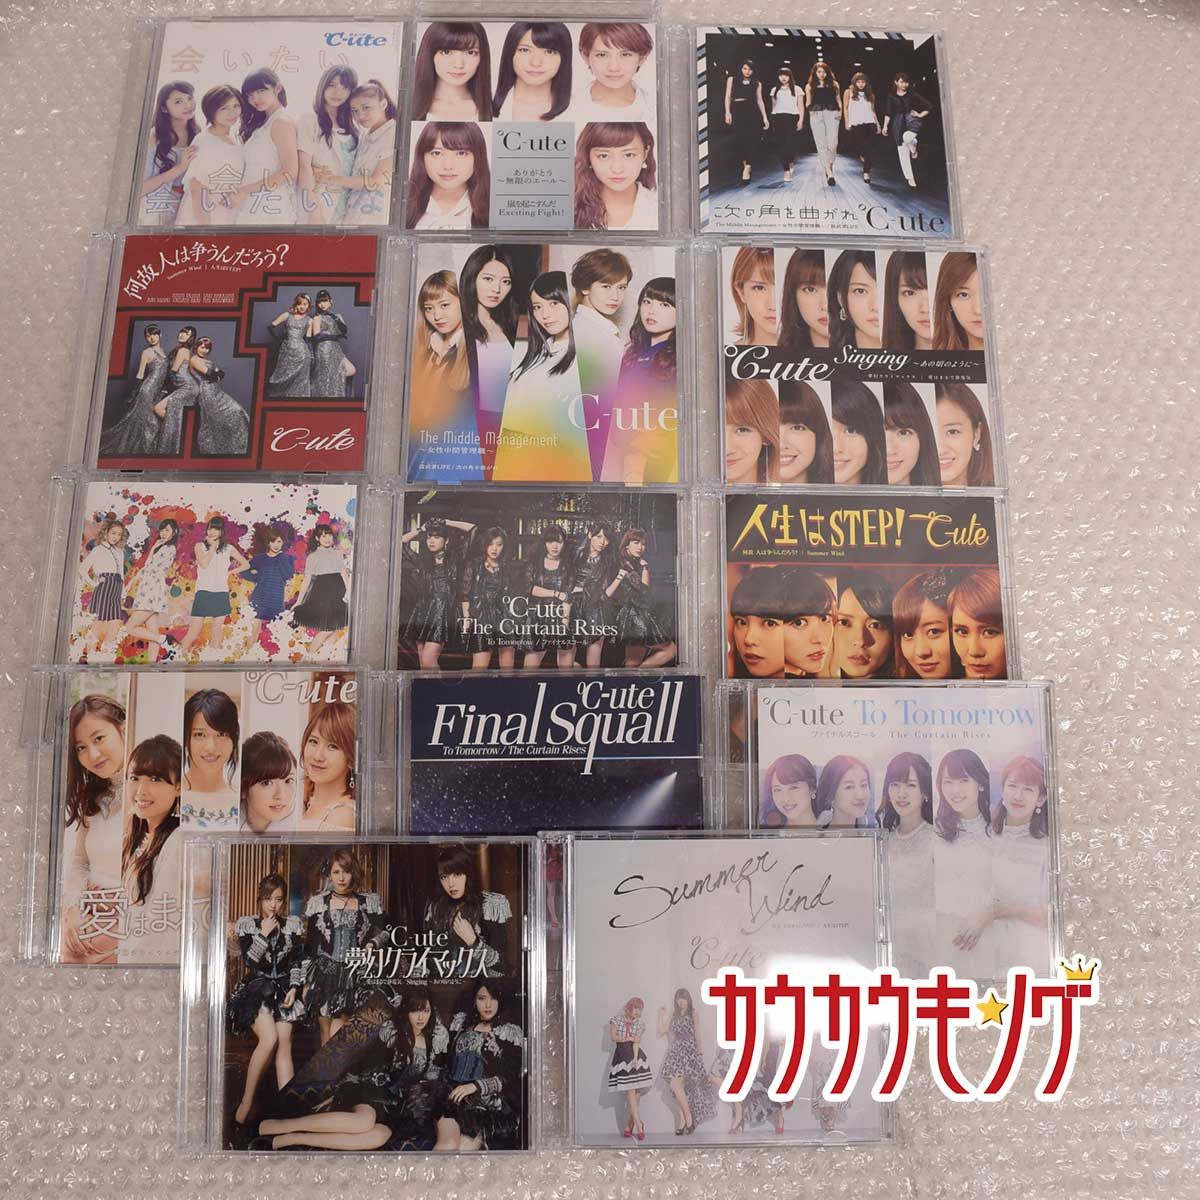 ℃-ute 初回盤 2枚組 CD/DVD セット キュート 14点 まとめ ハロプロ/モーニング娘。